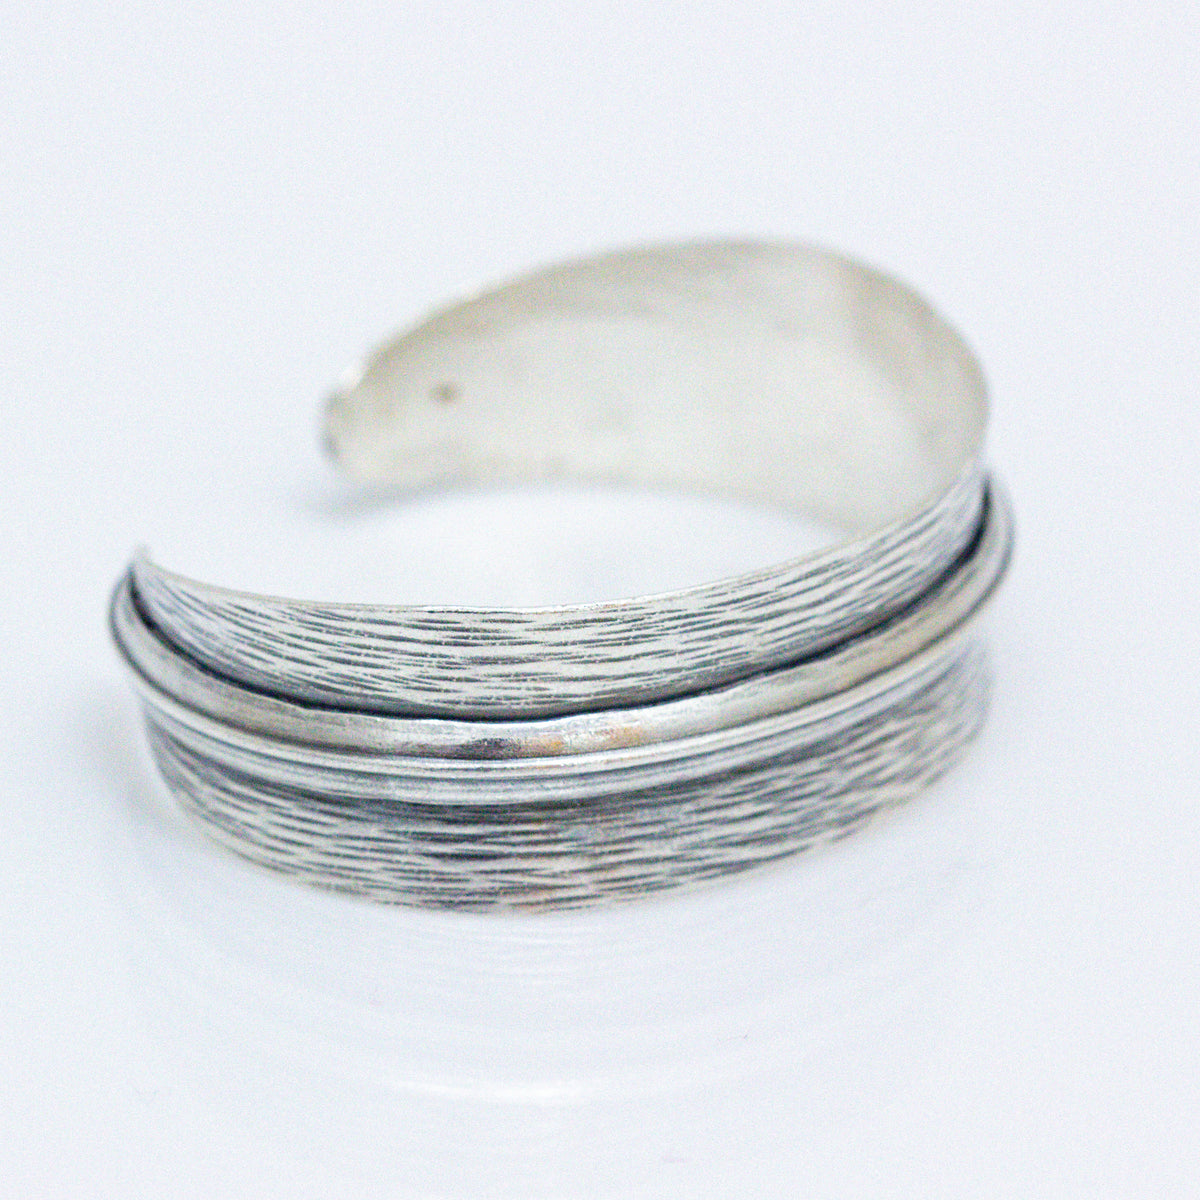 Woodgrain Textured Silver Cuff Bracelet